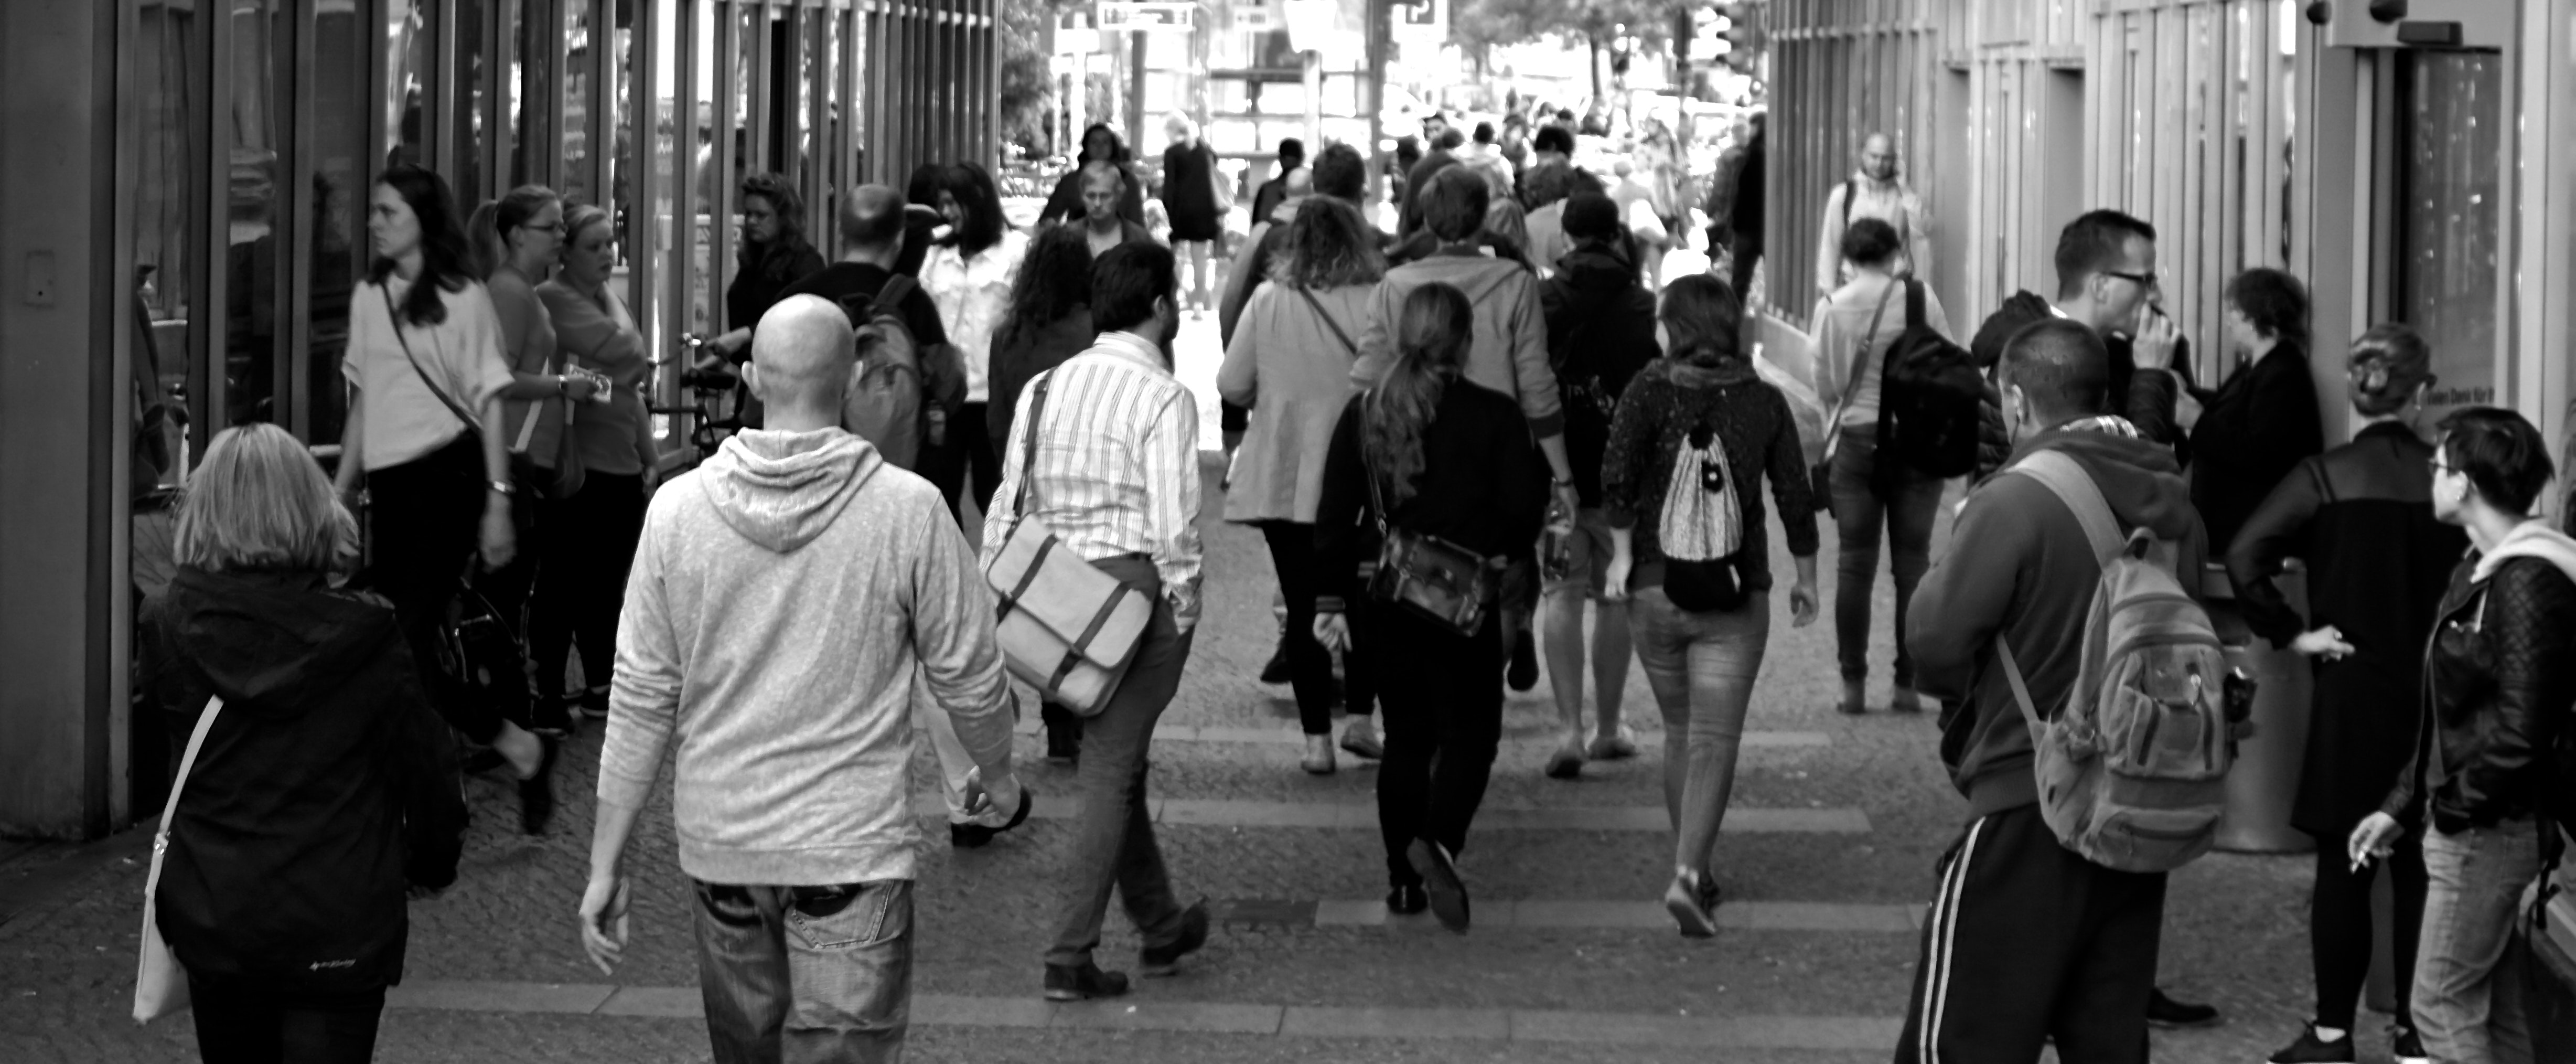 Free stock photo of community, crowd, pedestrians